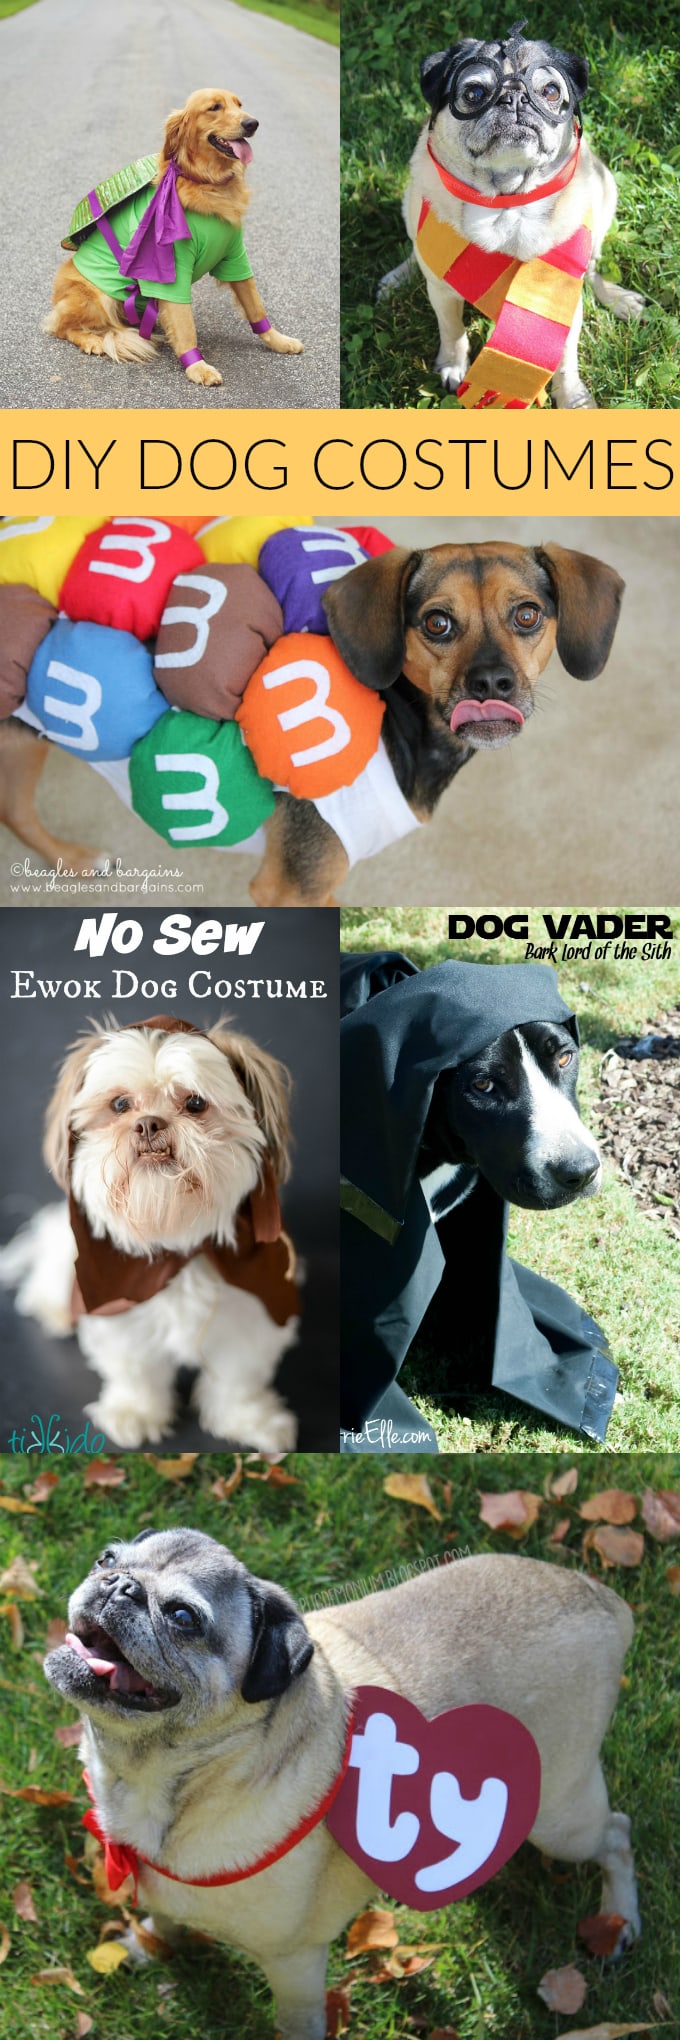 DIY Dog Costumes